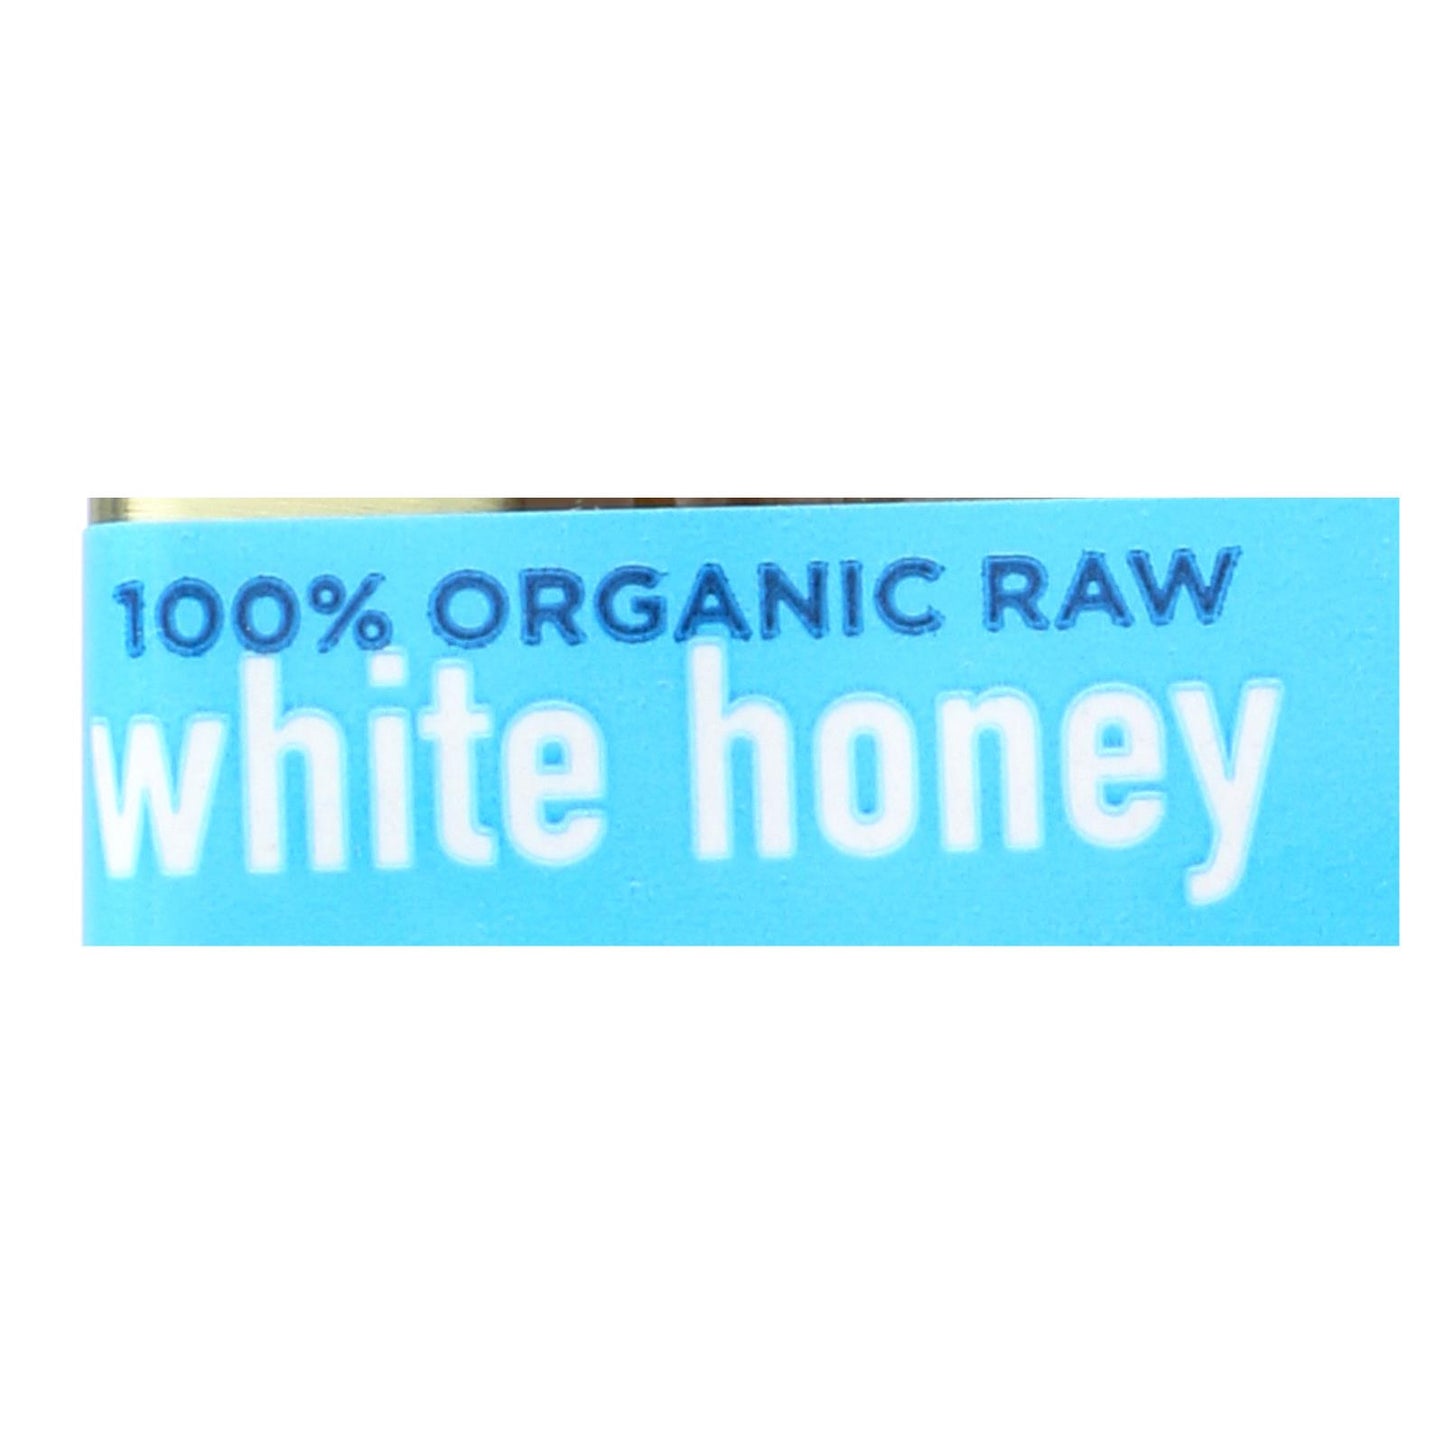 Heavenly Organics Organic Honey - White Raw - Case Of 6 - 12 Oz.